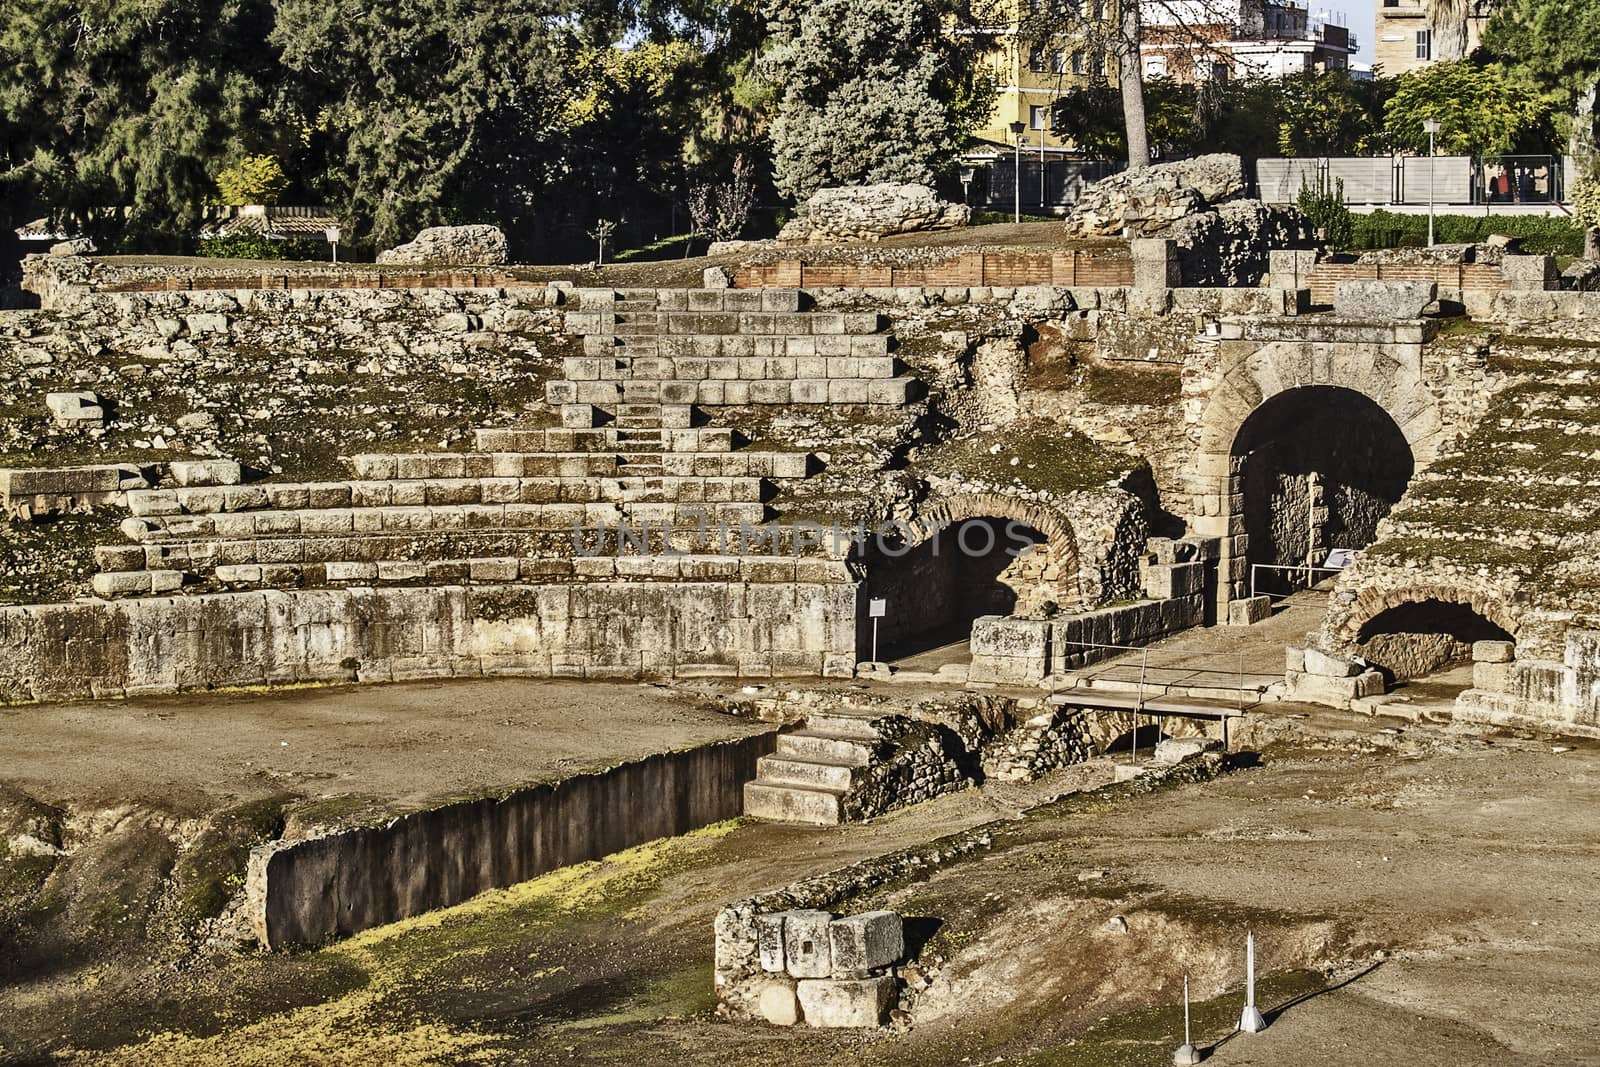 Merida, November 2012. Roman Amphitheater ruins in Merida, capital of Extremadura region in Spain. Year 8 B.C. 15,000 spectators. Archeological site UNESCO World Heritage Site.